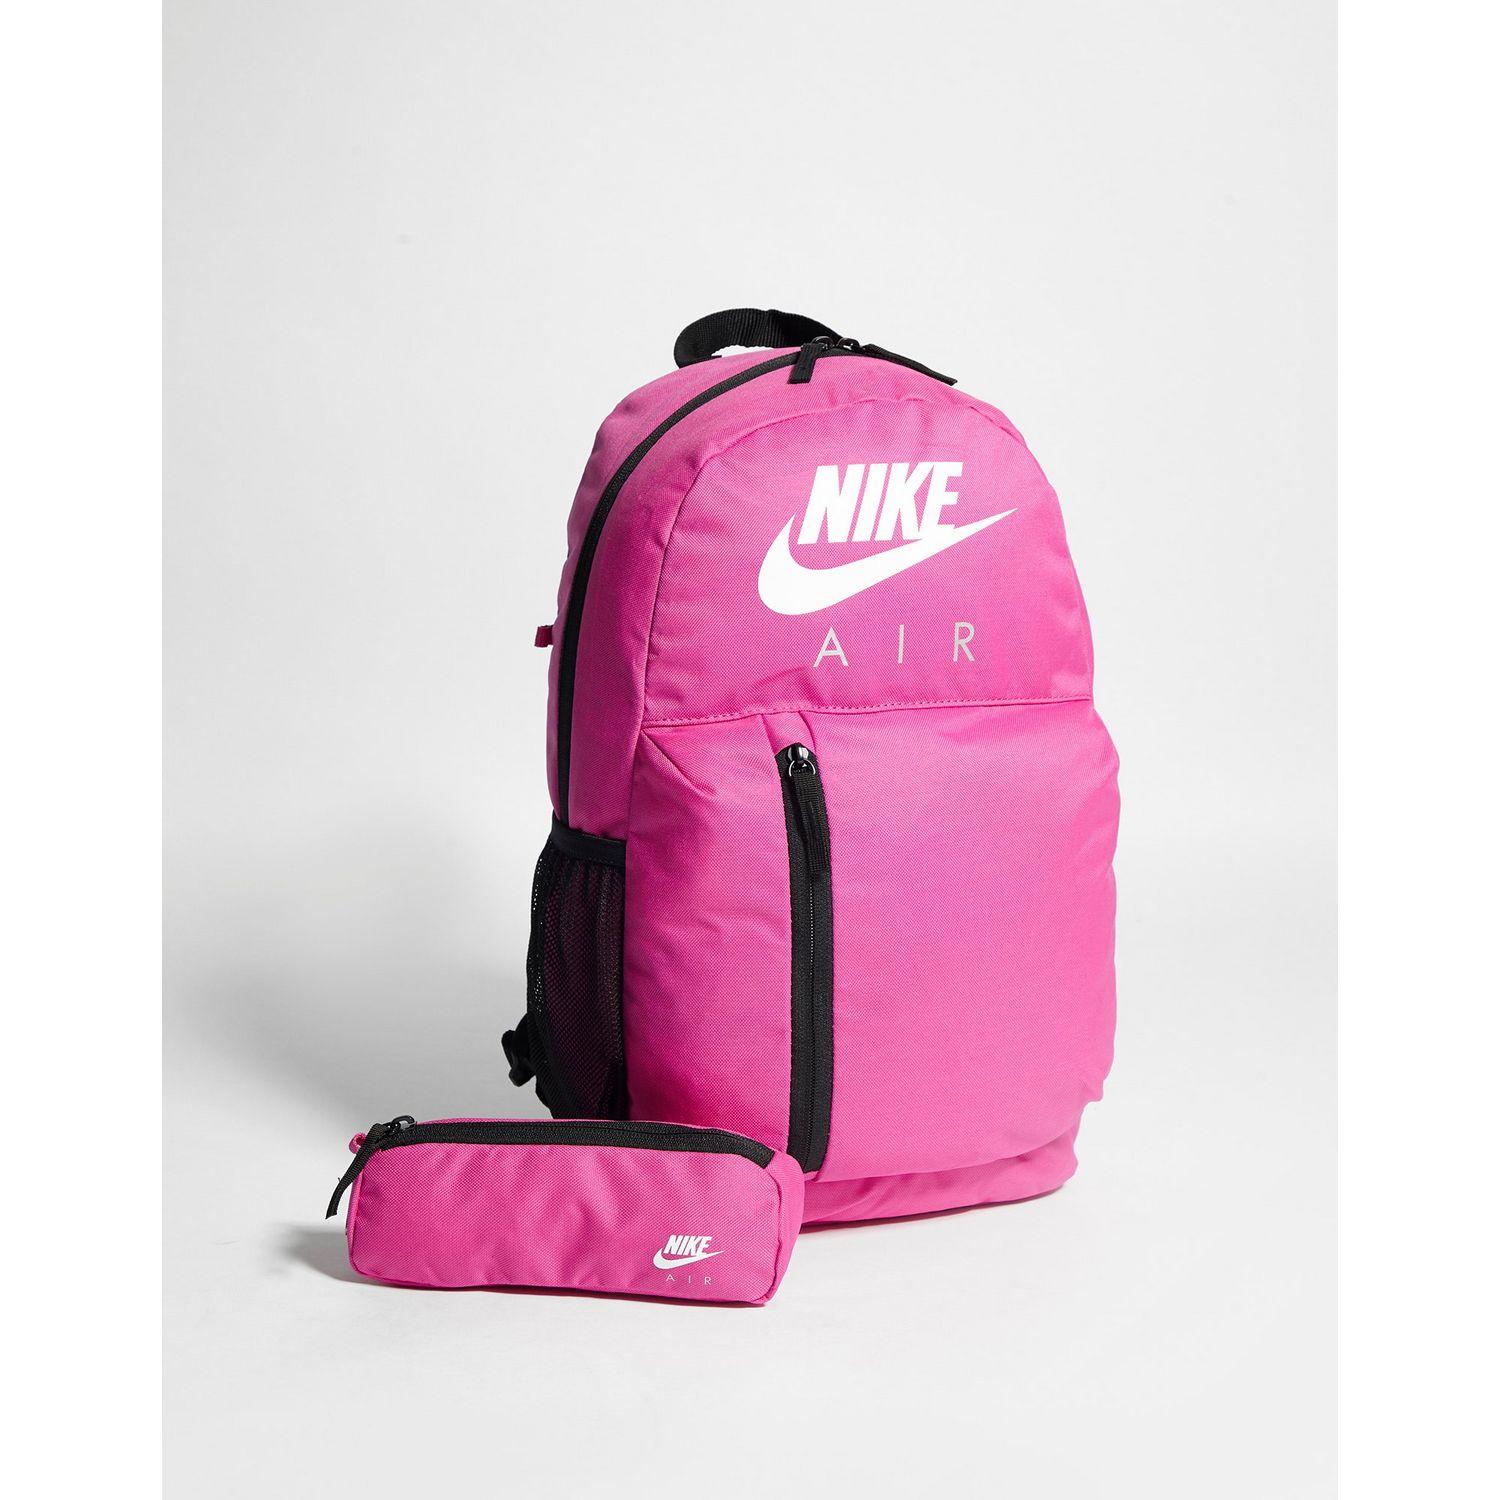 Nike Elemental Backpack in Pink for Men - Lyst